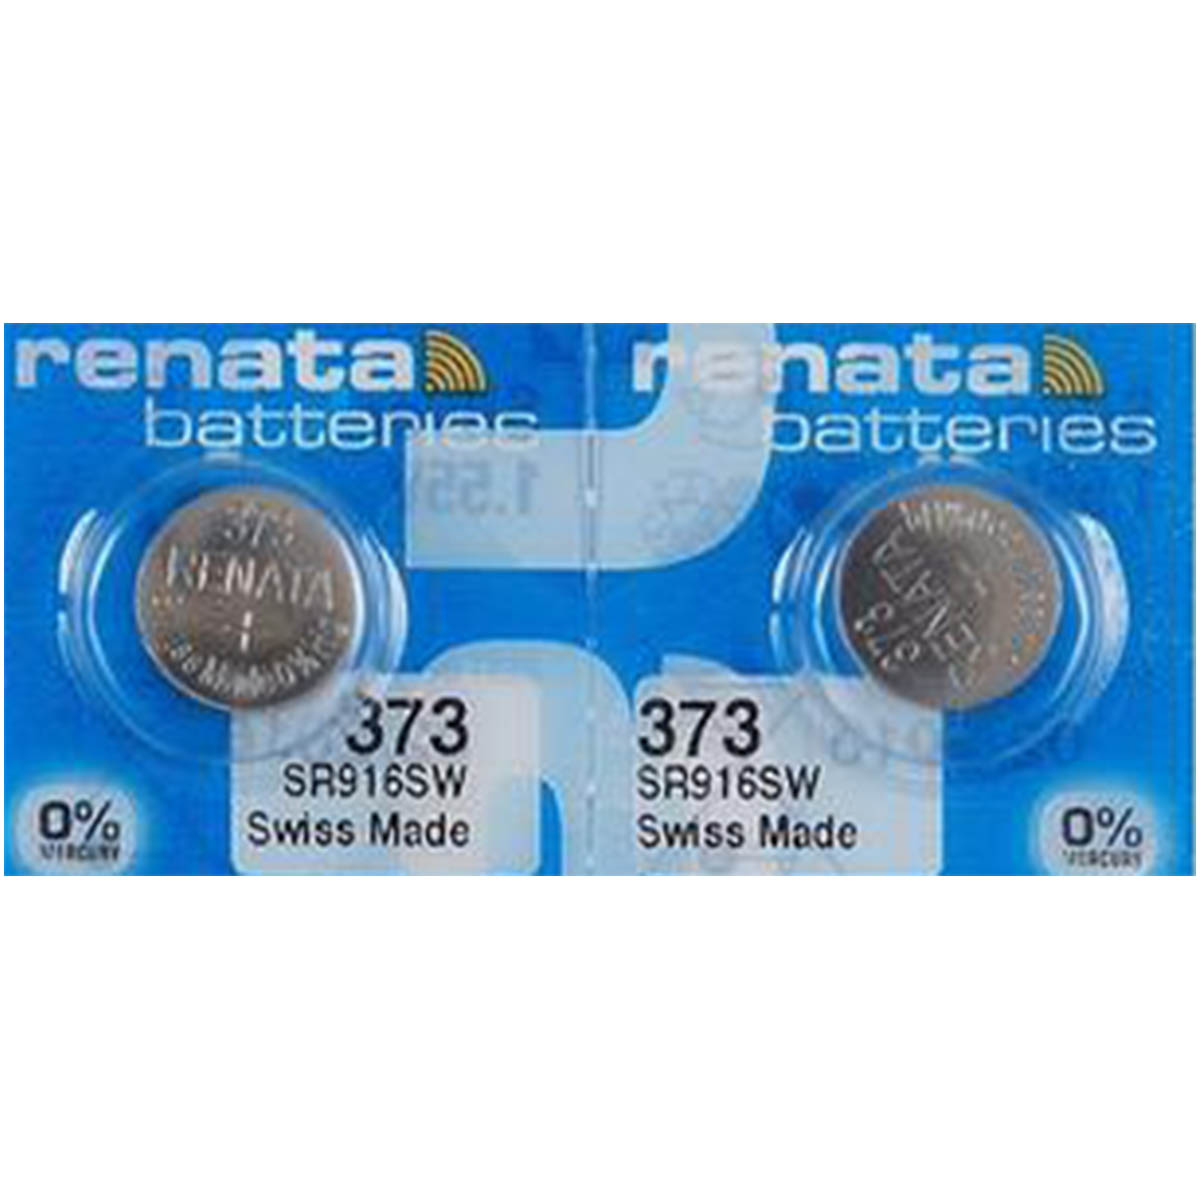 2x Renata 373 Uhren-Batterie Knopfzelle SR916SW 1,55V Silberoxid Neu 